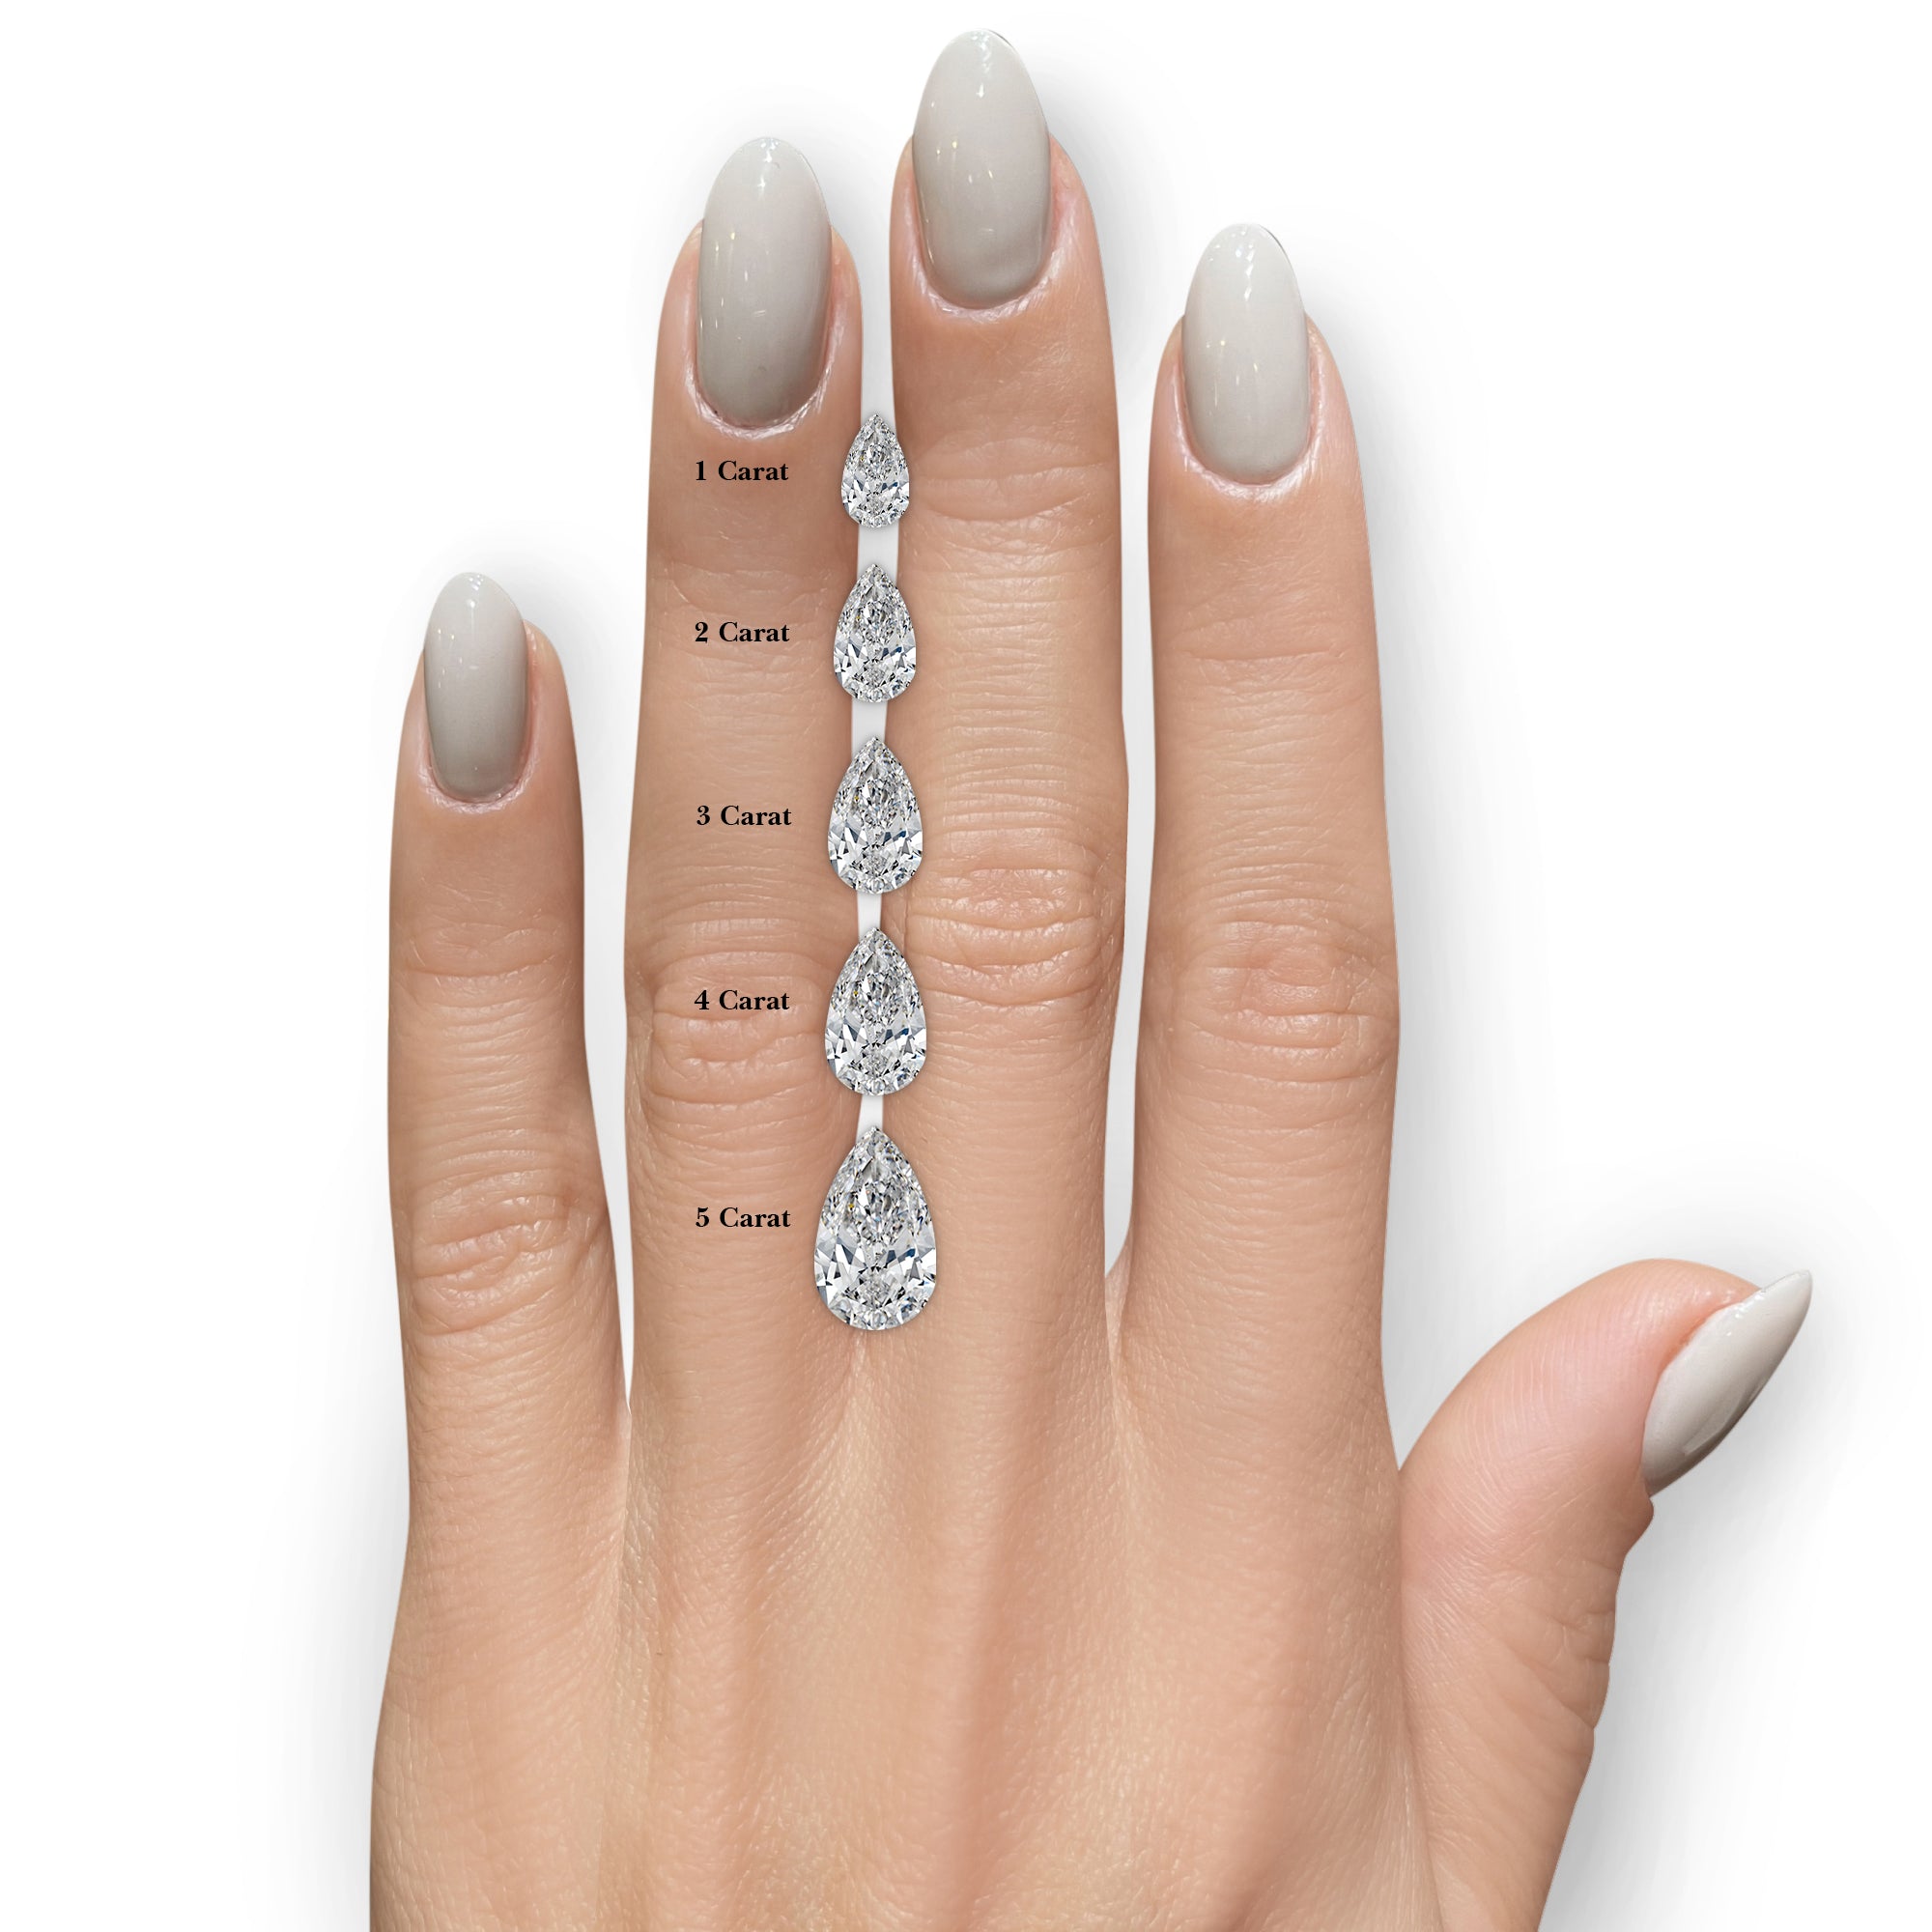 Hailey Diamond Engagement Ring -Platinum